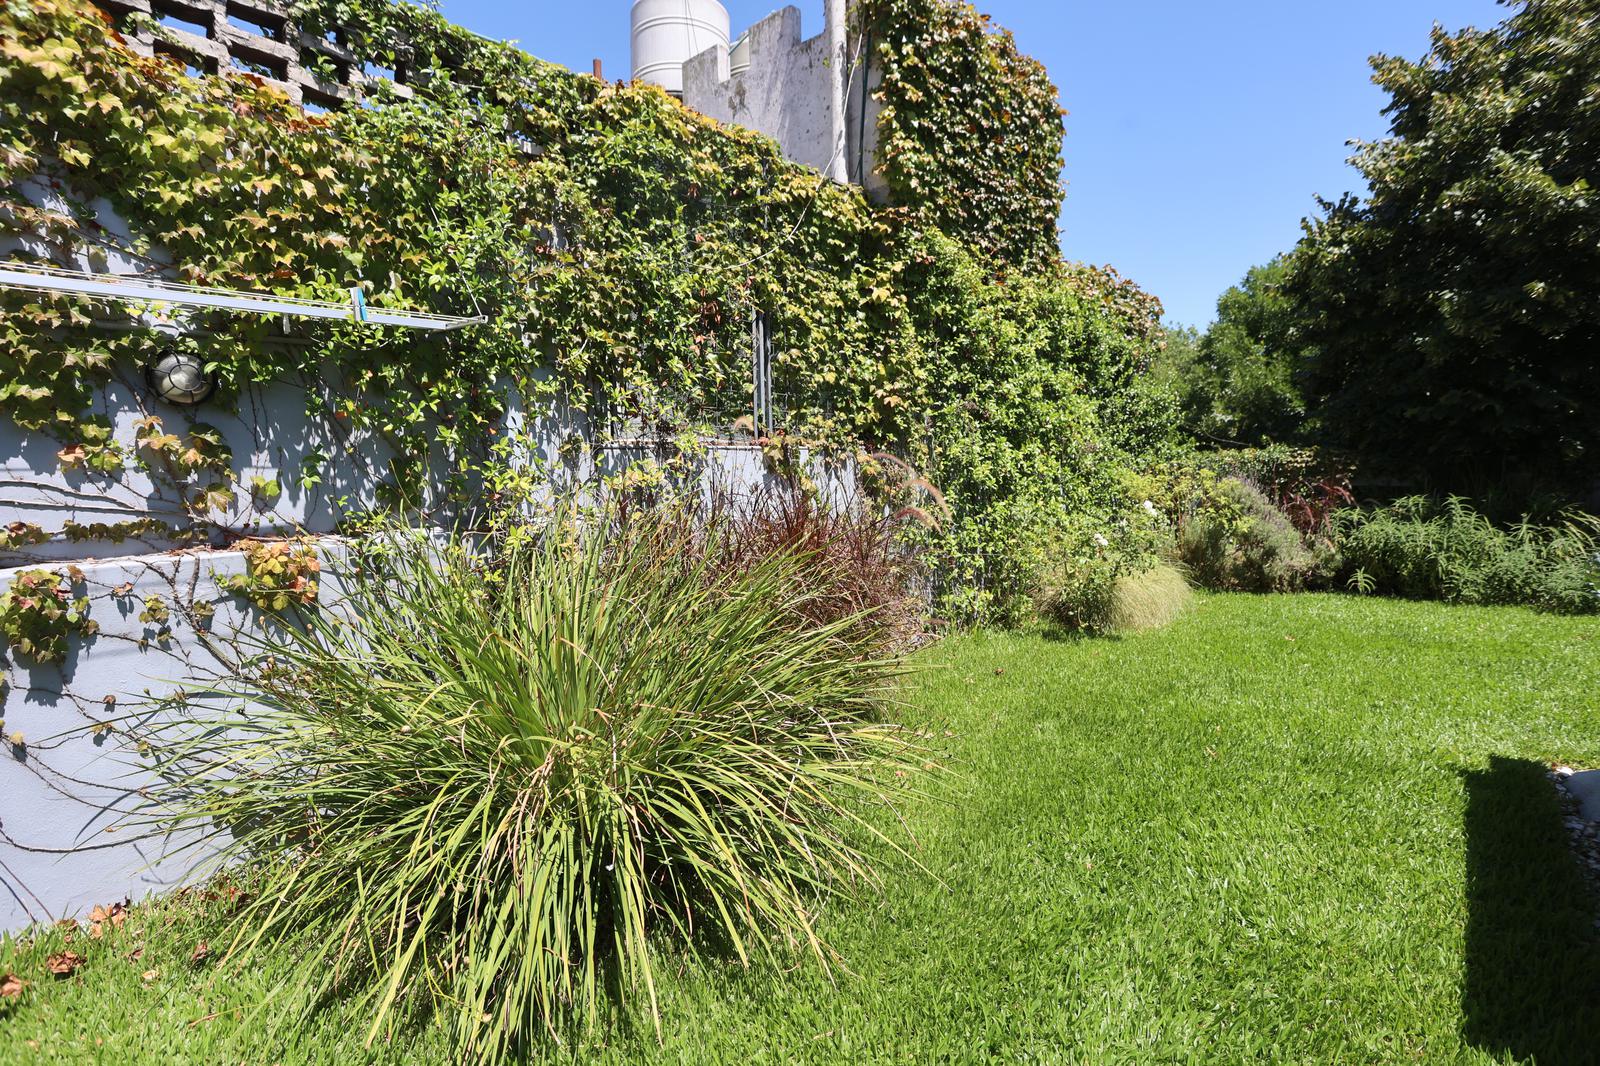 Casa en Venta de 4 ambientes con Espectacular jardín verde en terraza- Caballito